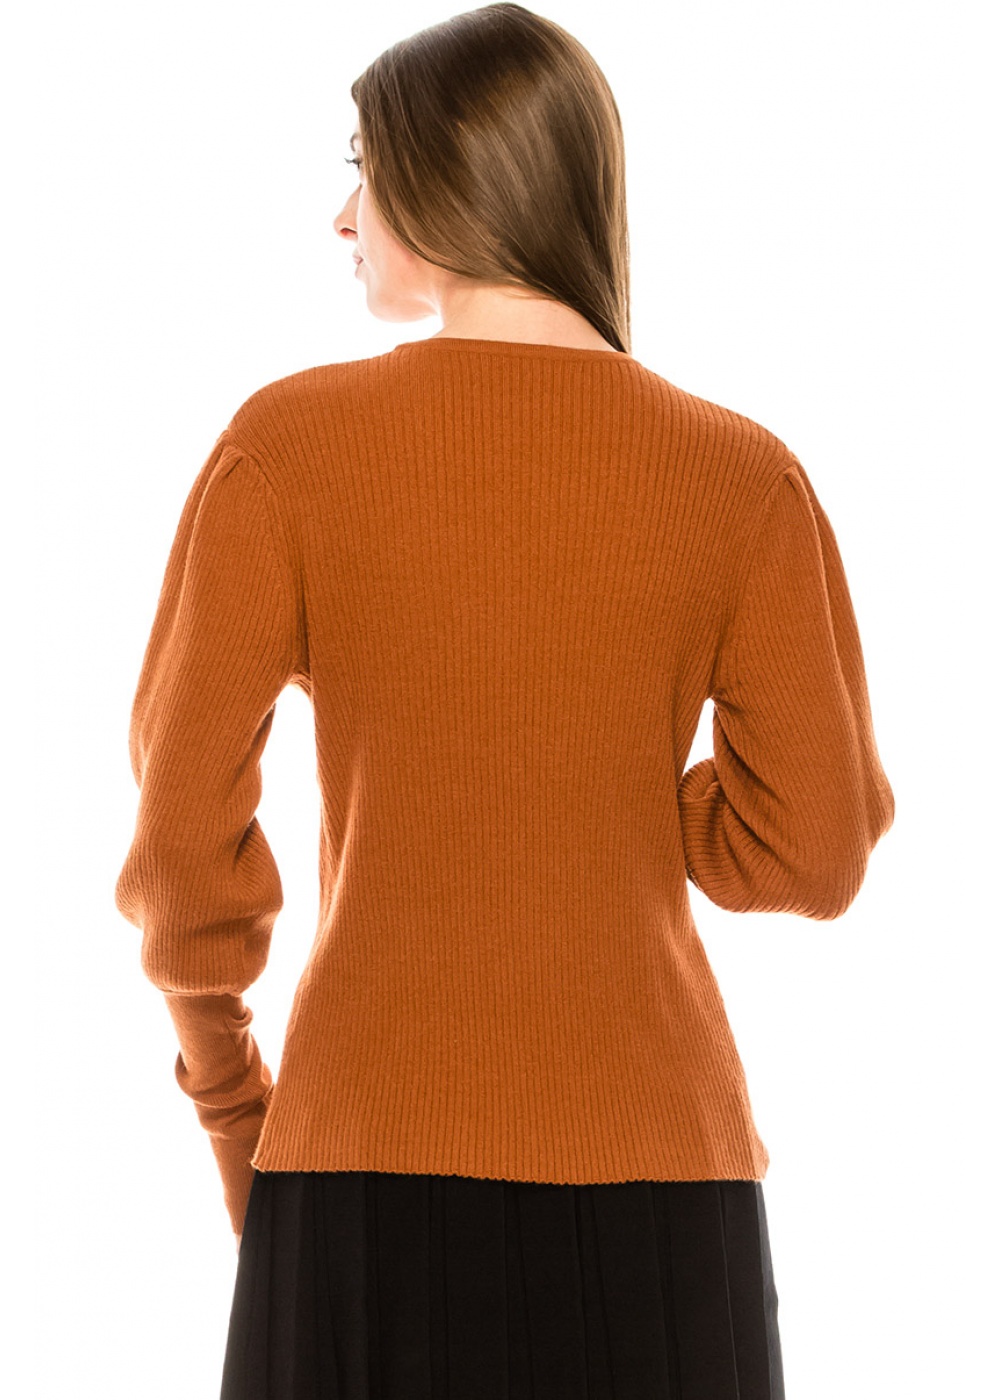 Crew neck leg-of-mutton sleeve sweater in rust